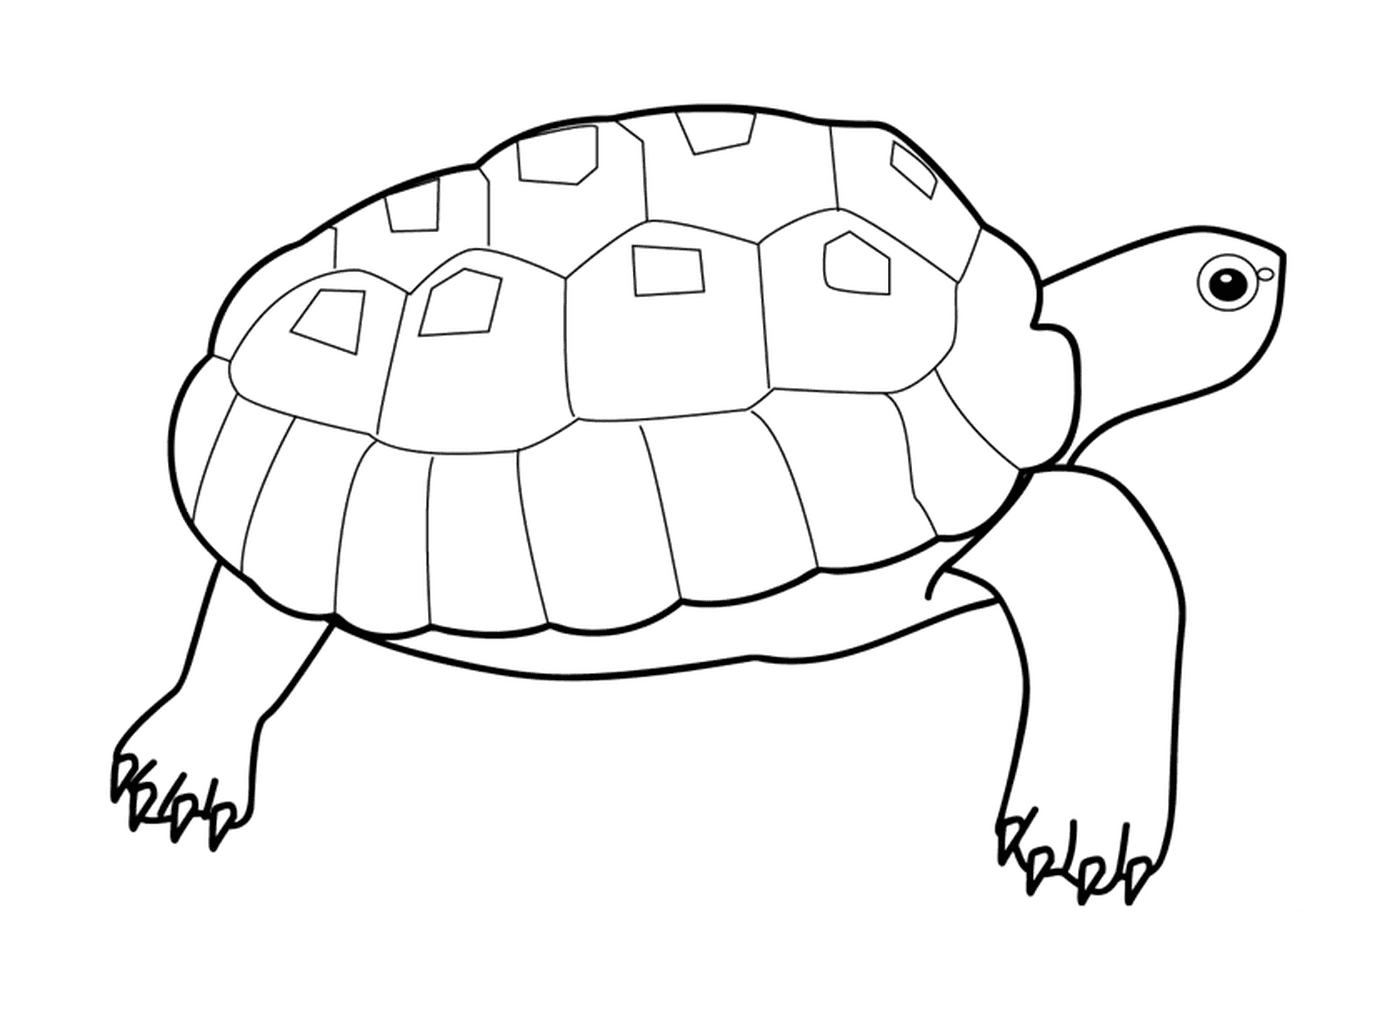  Una tartaruga 